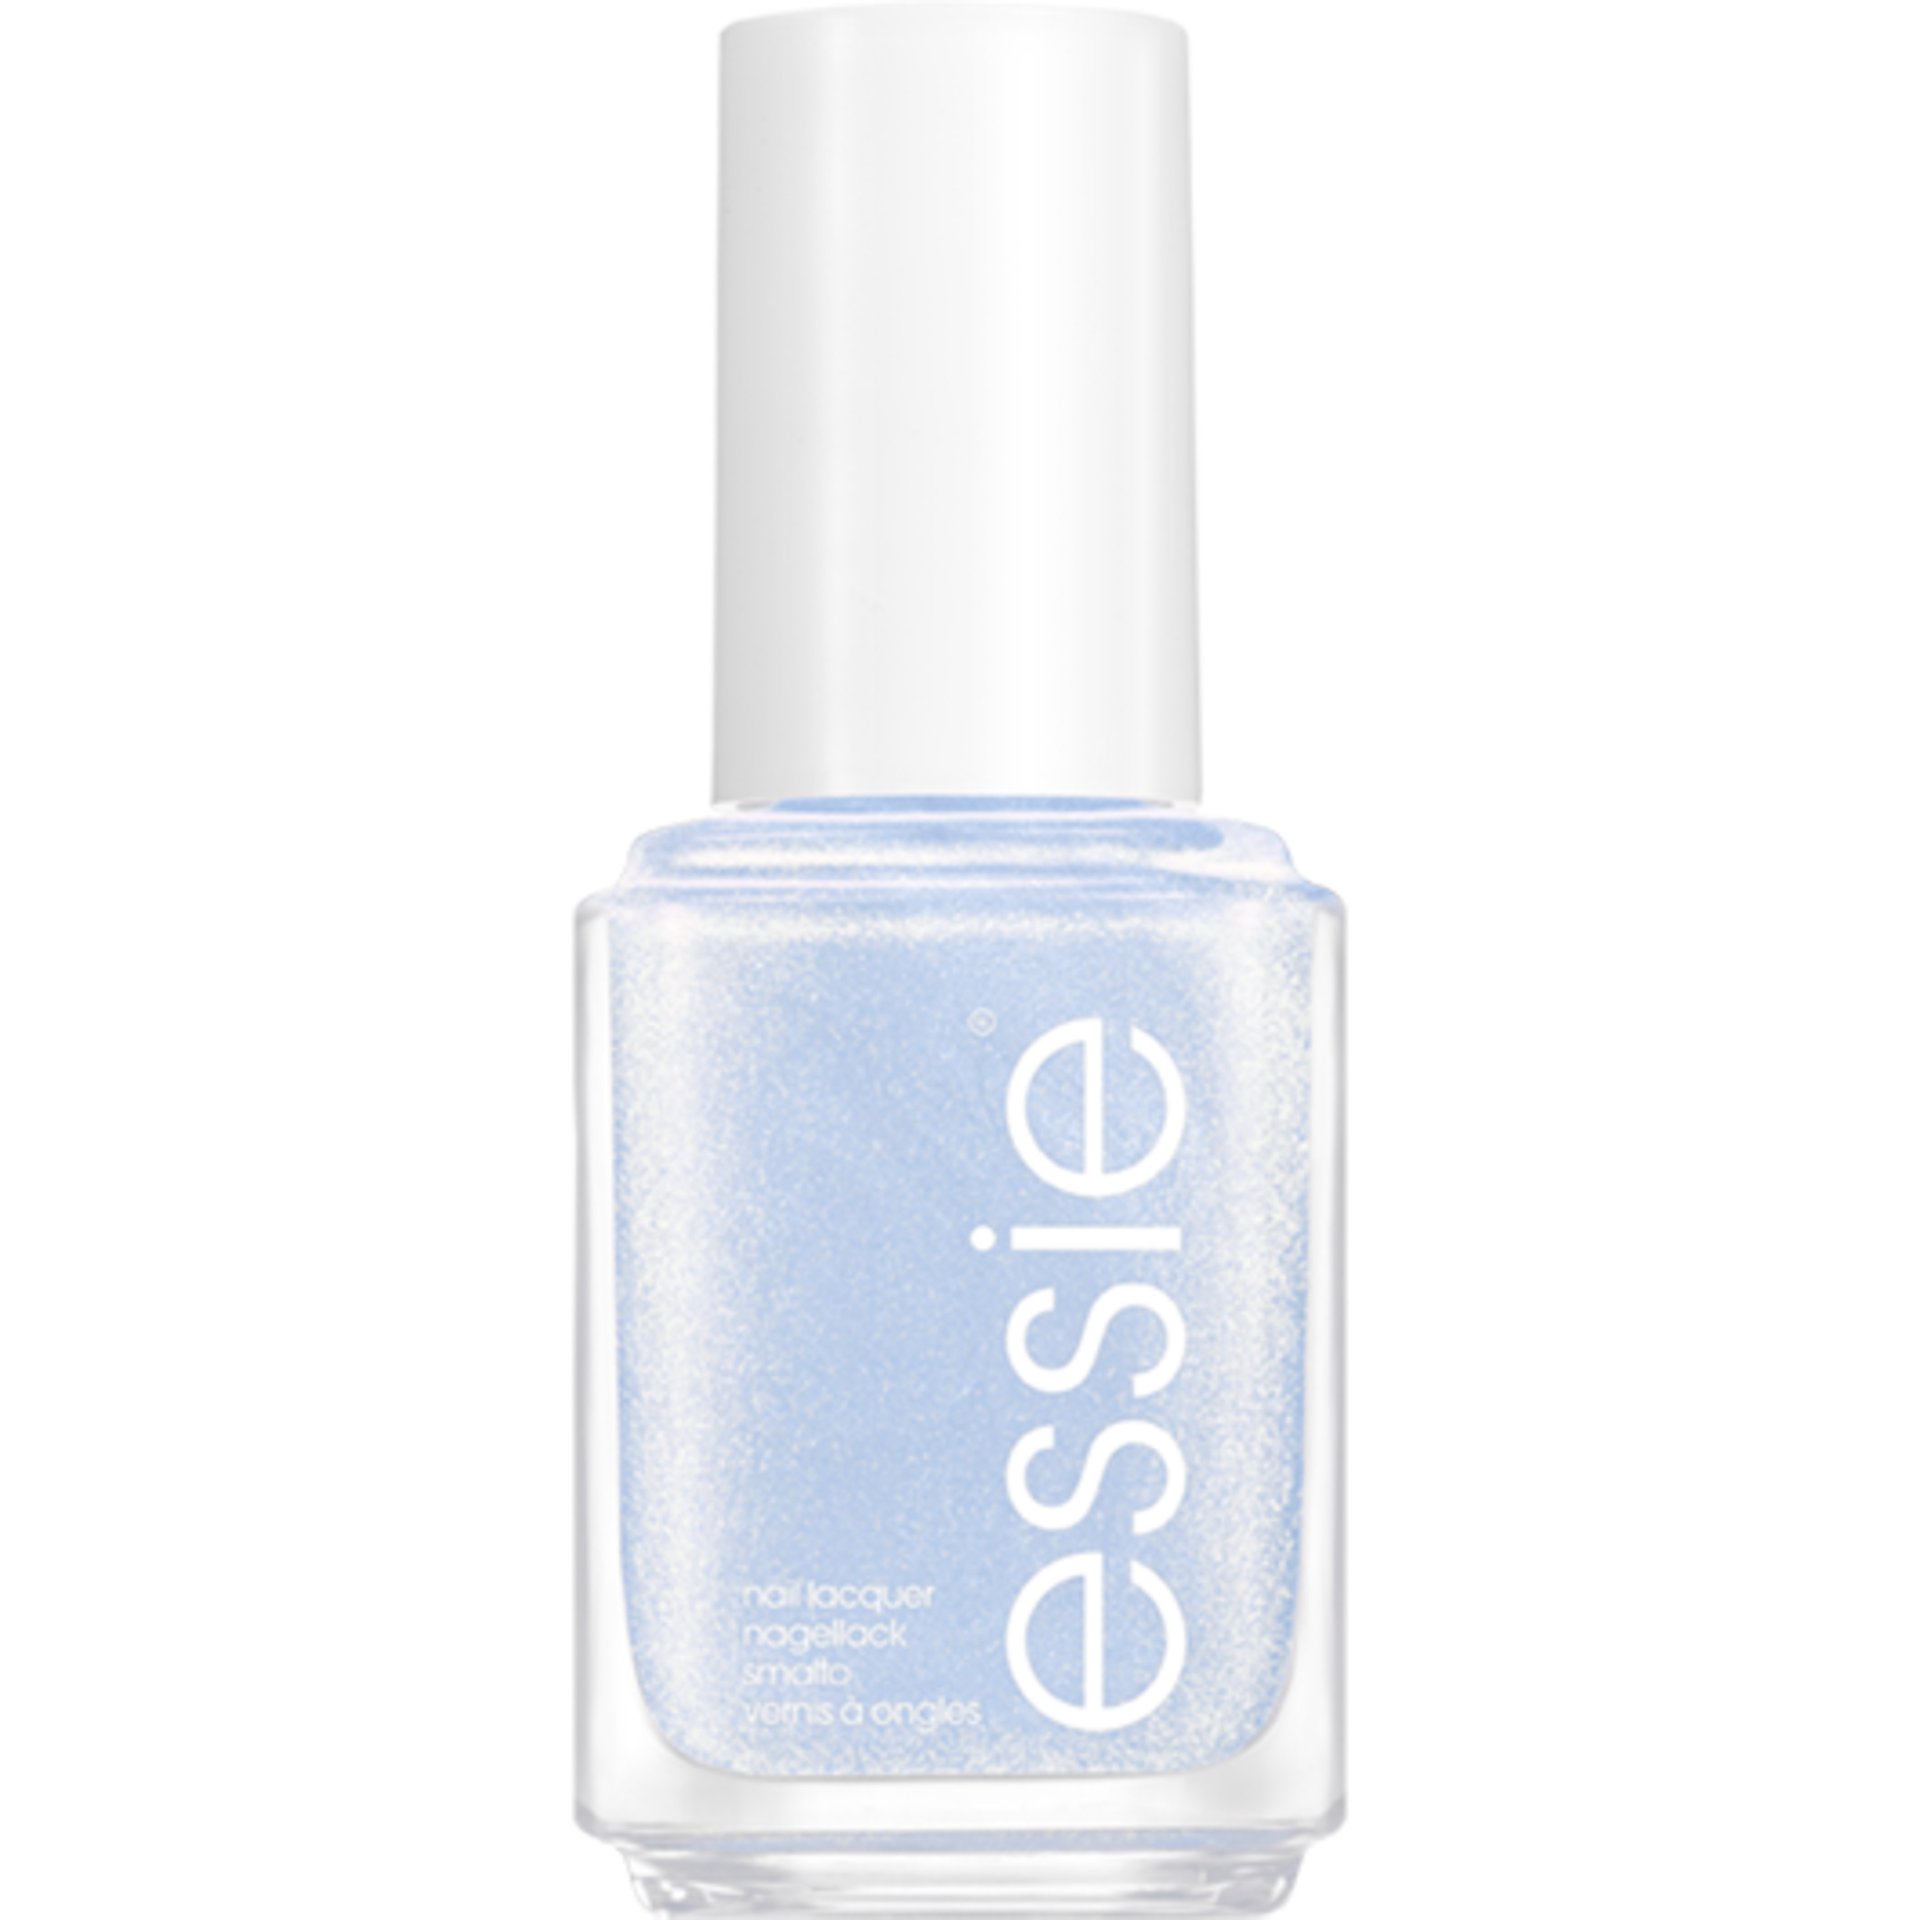 love at frost sight - metallic blue nail polish - essie